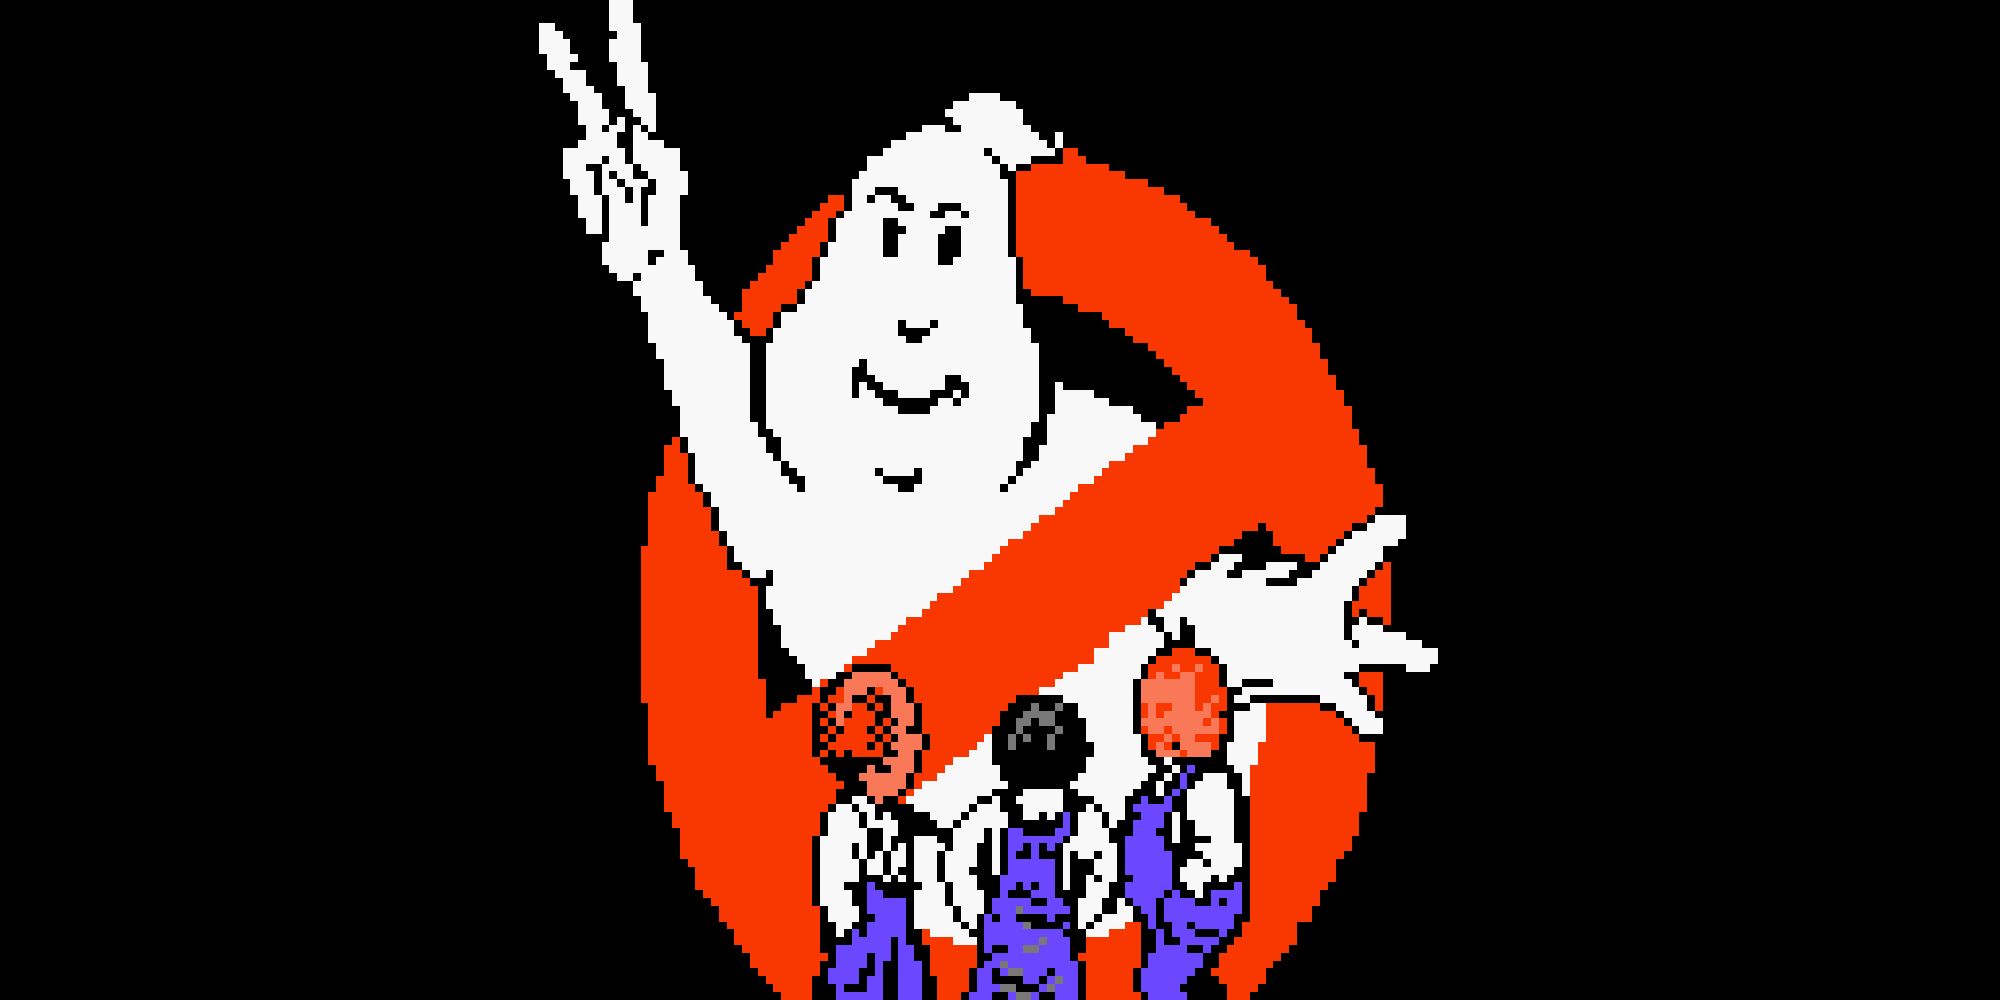 Три марионетки стоят перед логотипом Ghostbusters 2 в своей игре для NES.